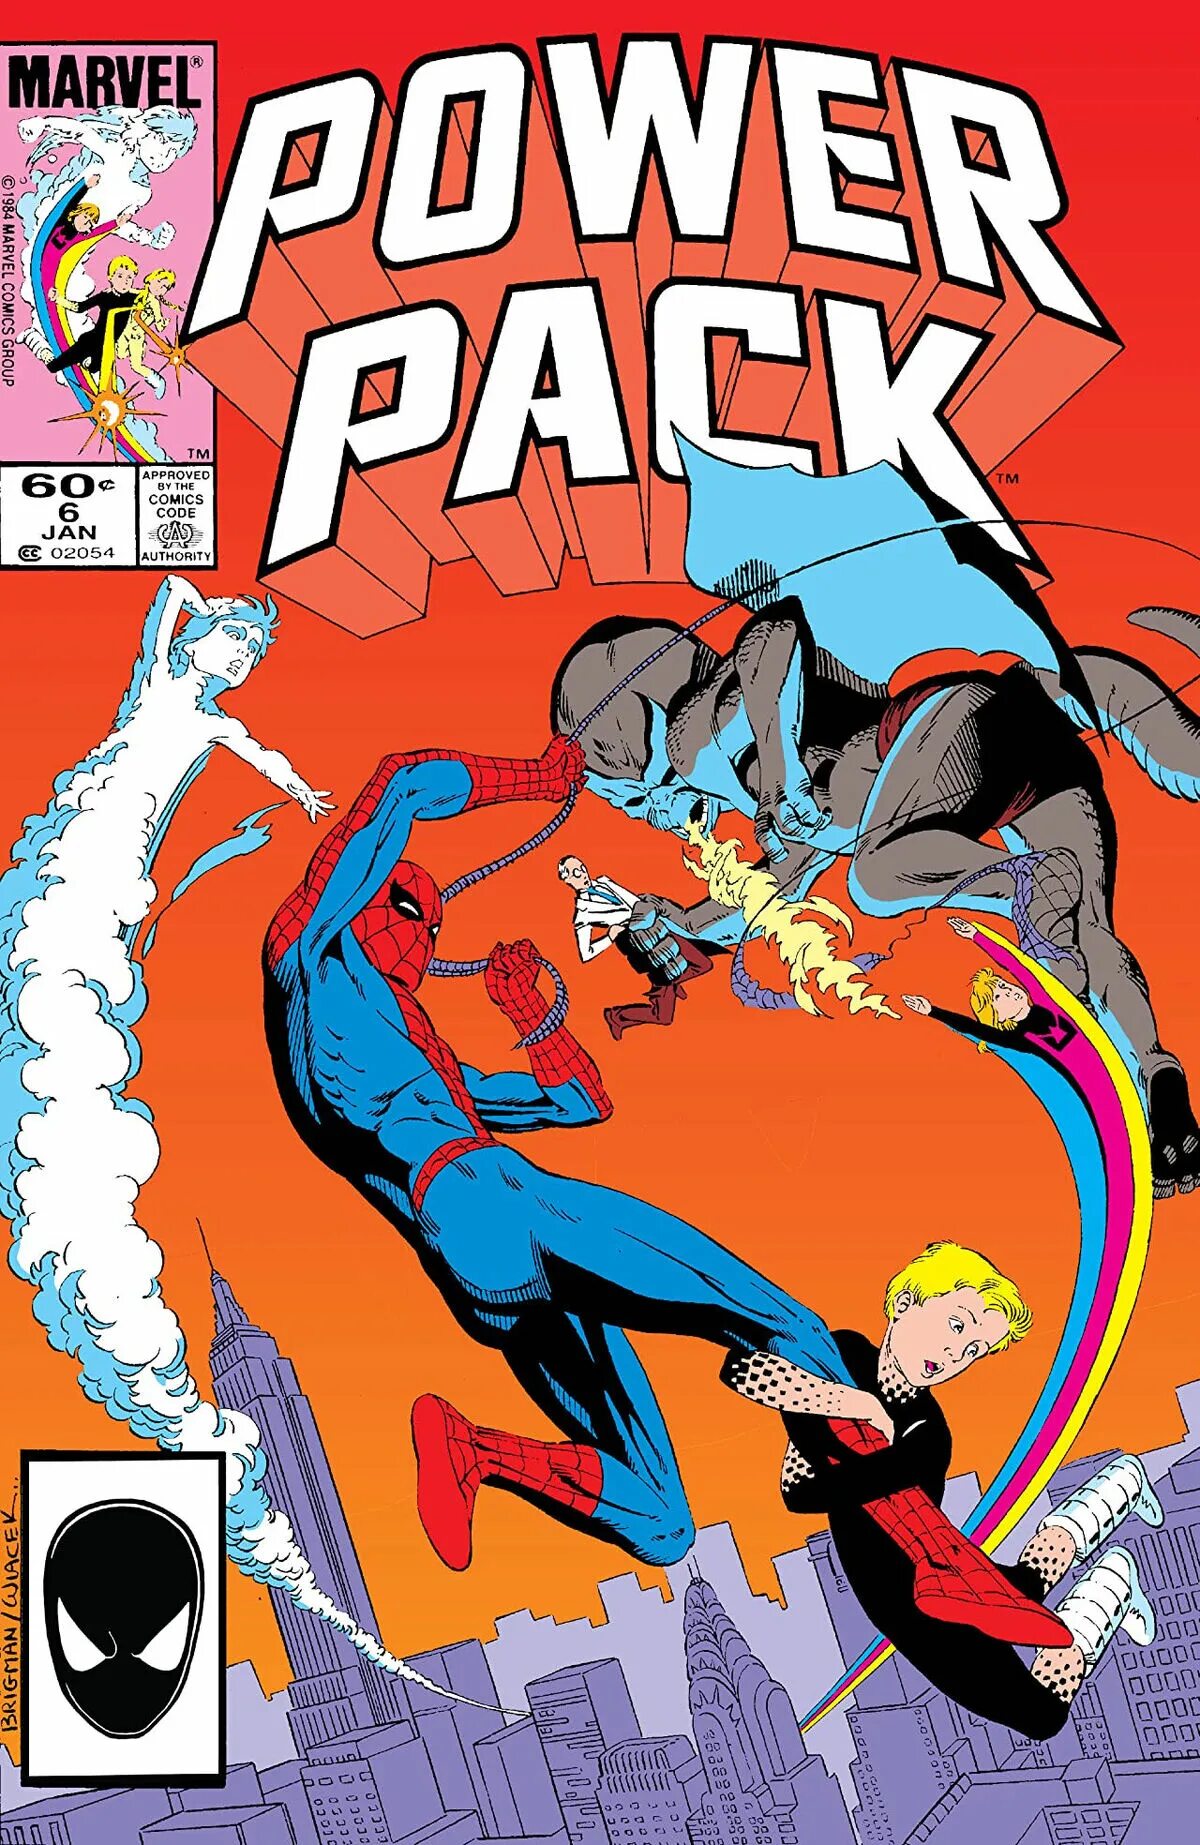 Power packing комиксы. Power Pack комикс. A Power Packing комикс. Джек Пауэр Marvel. Пауэр пак Марвел.